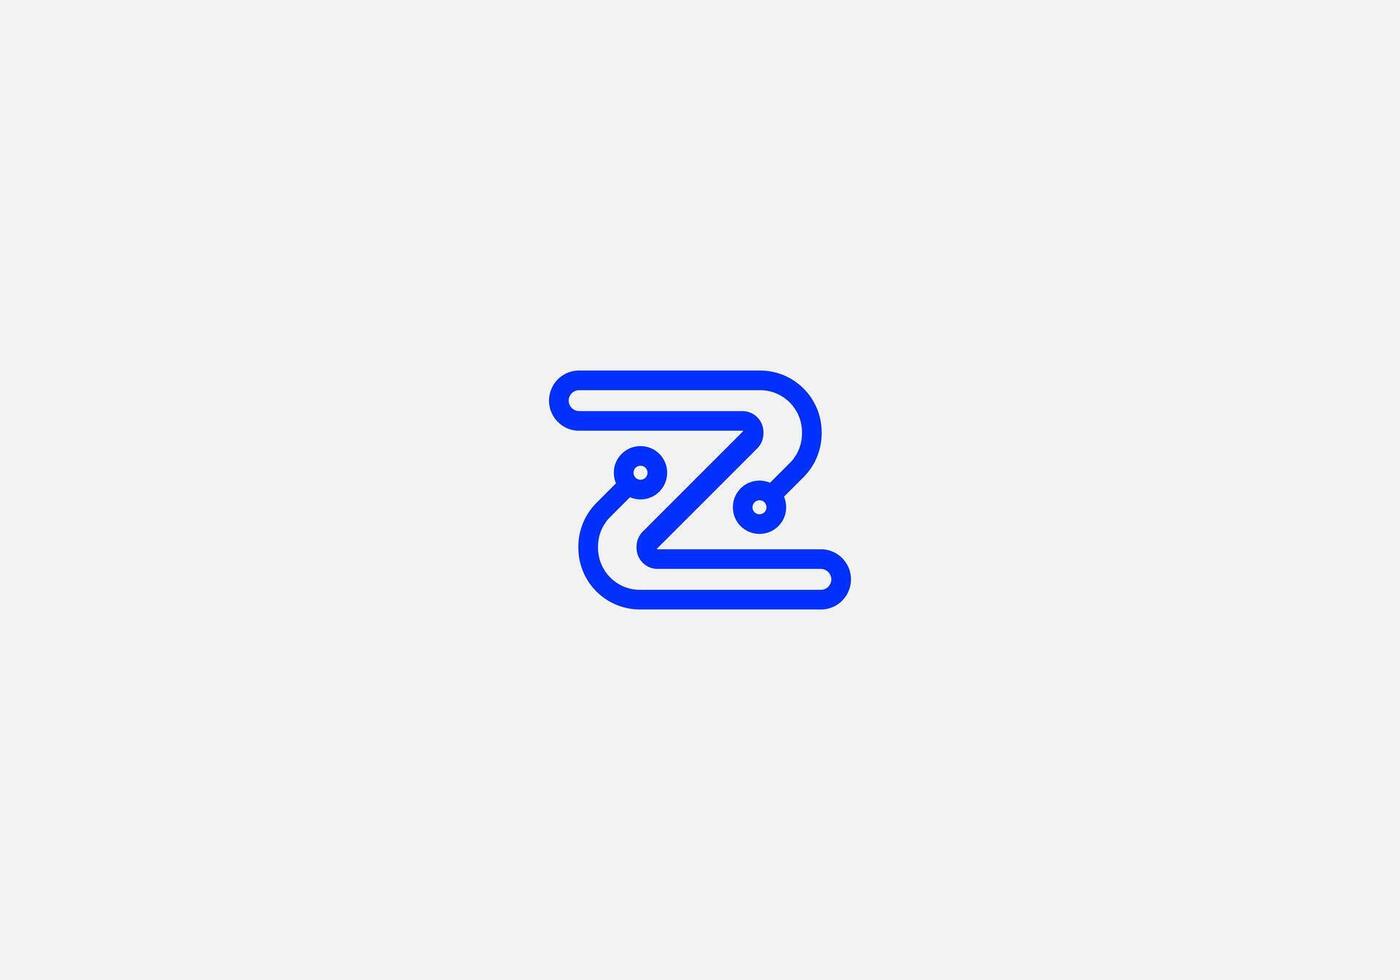 logo brief z en technologie, connectiviteit. techniek, telecommunicatie, aansluiten, logo uniek, modern, minimalistisch. bedrijf identiteit vector icoon.